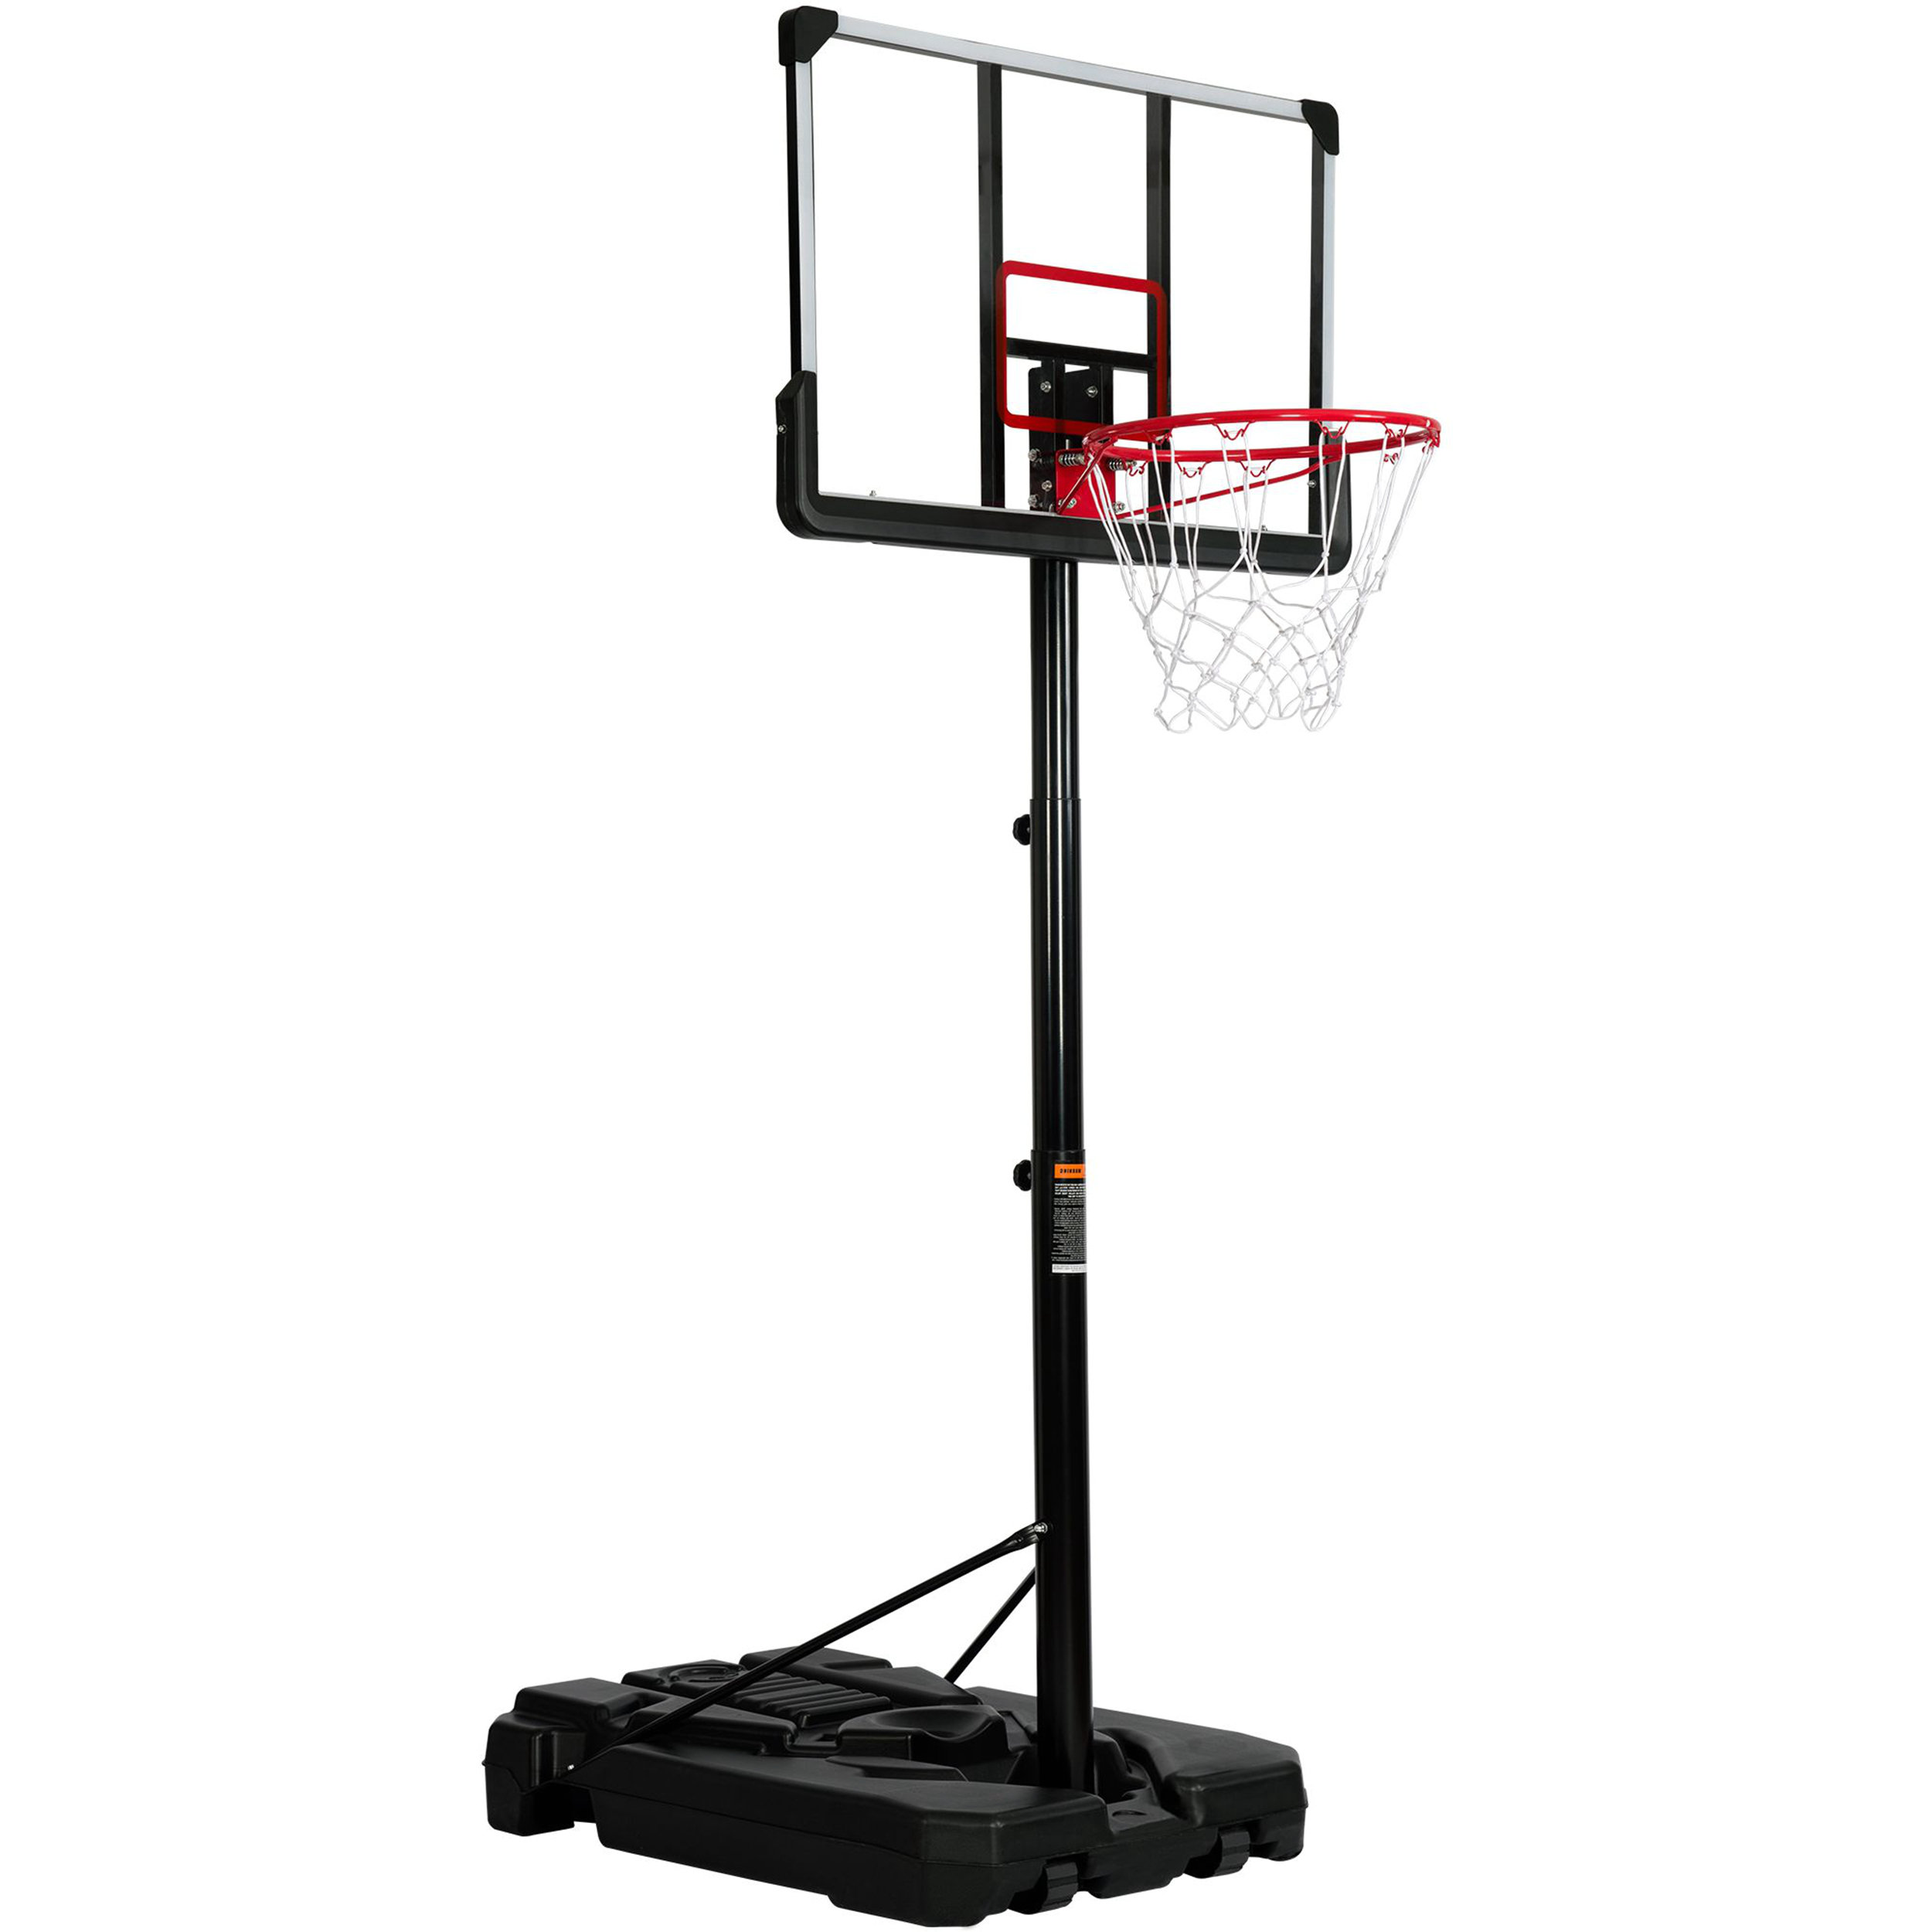 3m Adjustable Basketball Hoop 